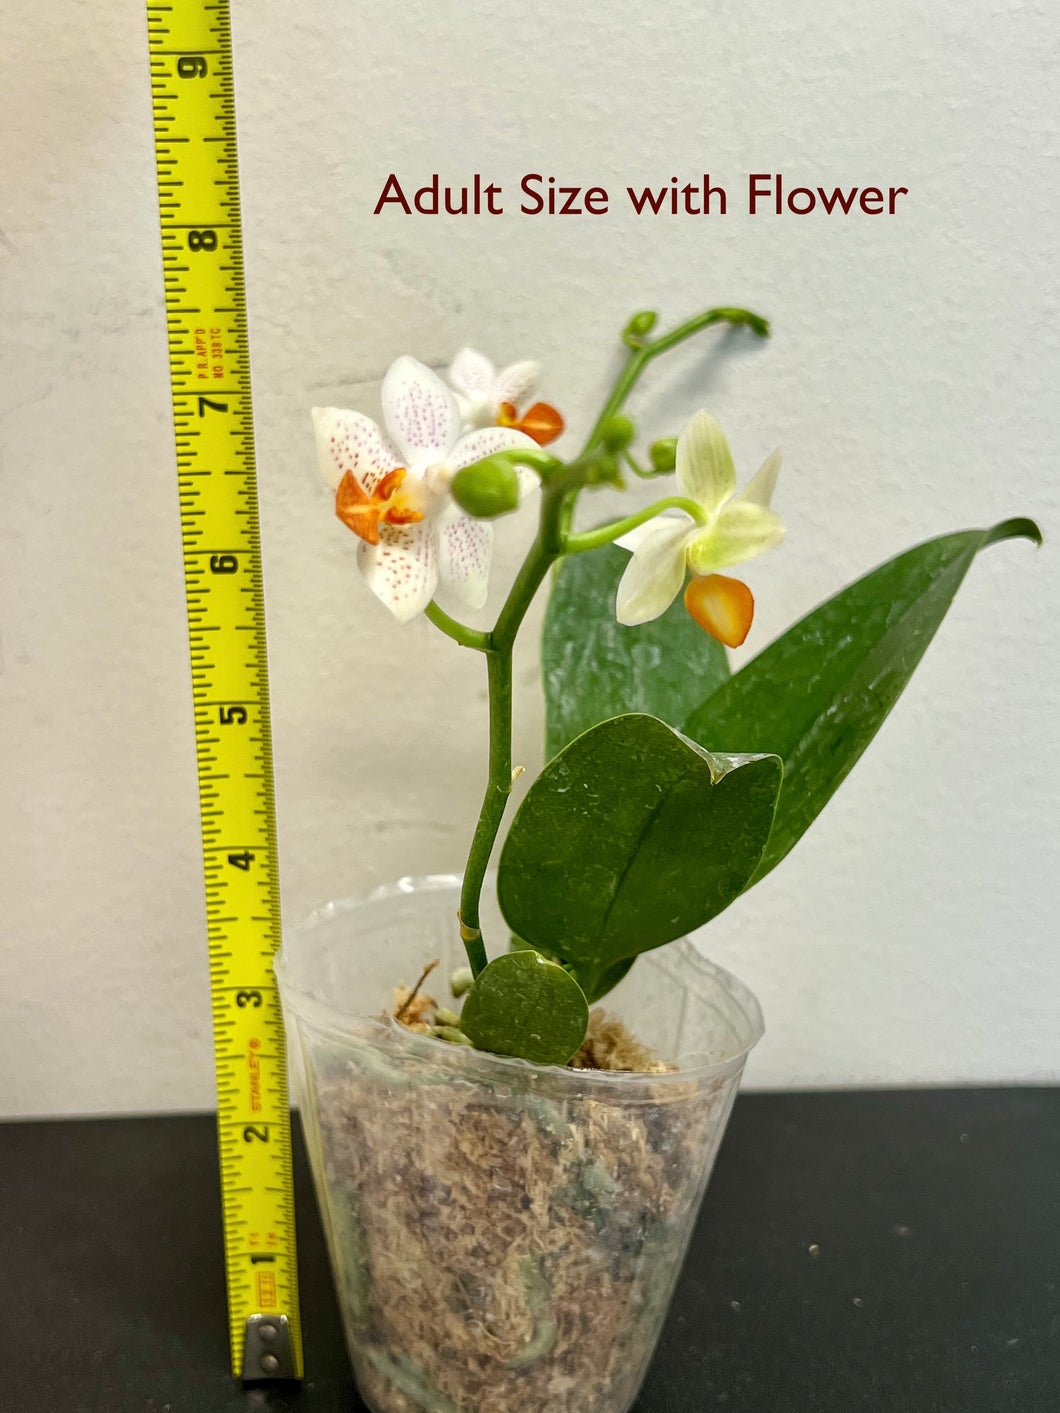 [BEST SELLER] Phalaenopsis Mini Mark 'Holm', Creamy White Flower with Purple Spots